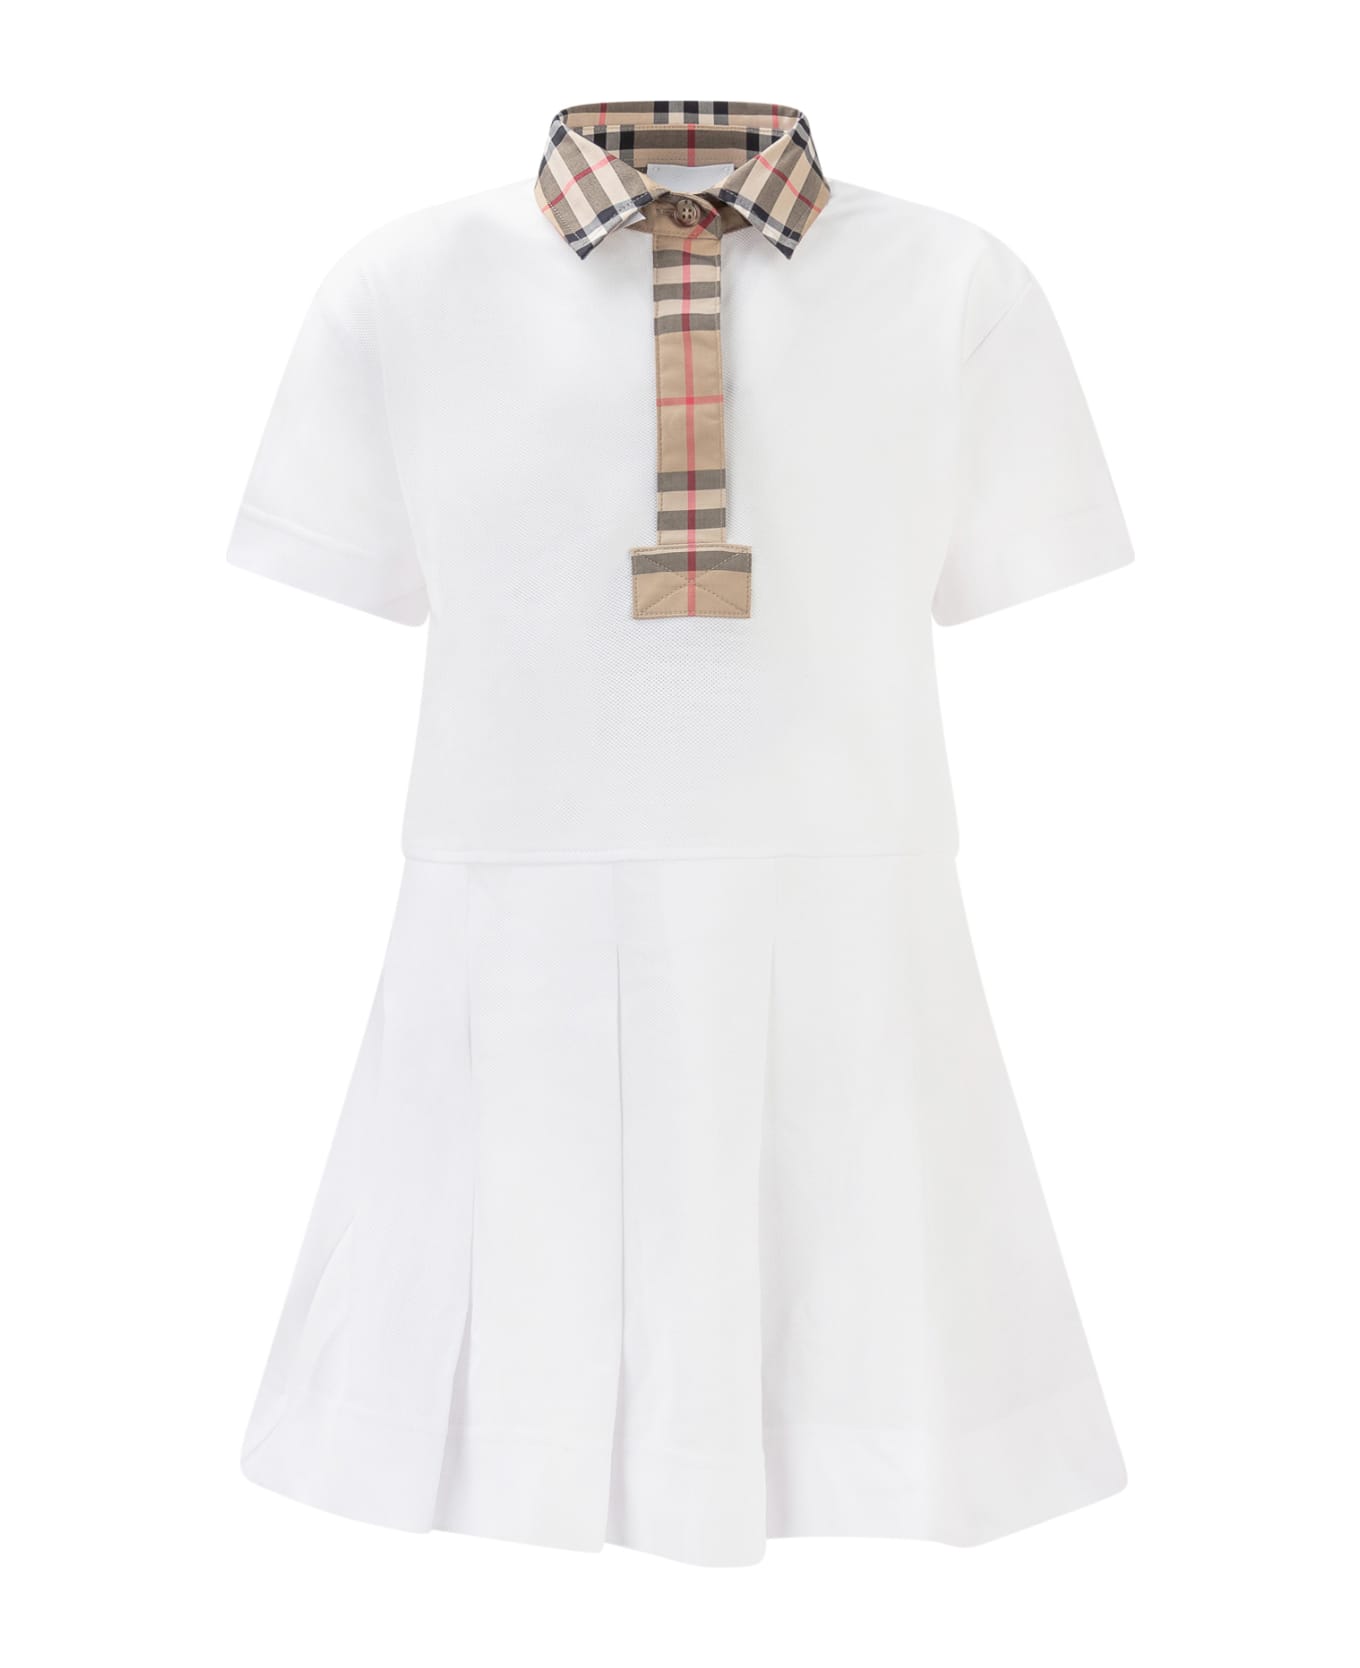 Burberry Sigrid Dress - White